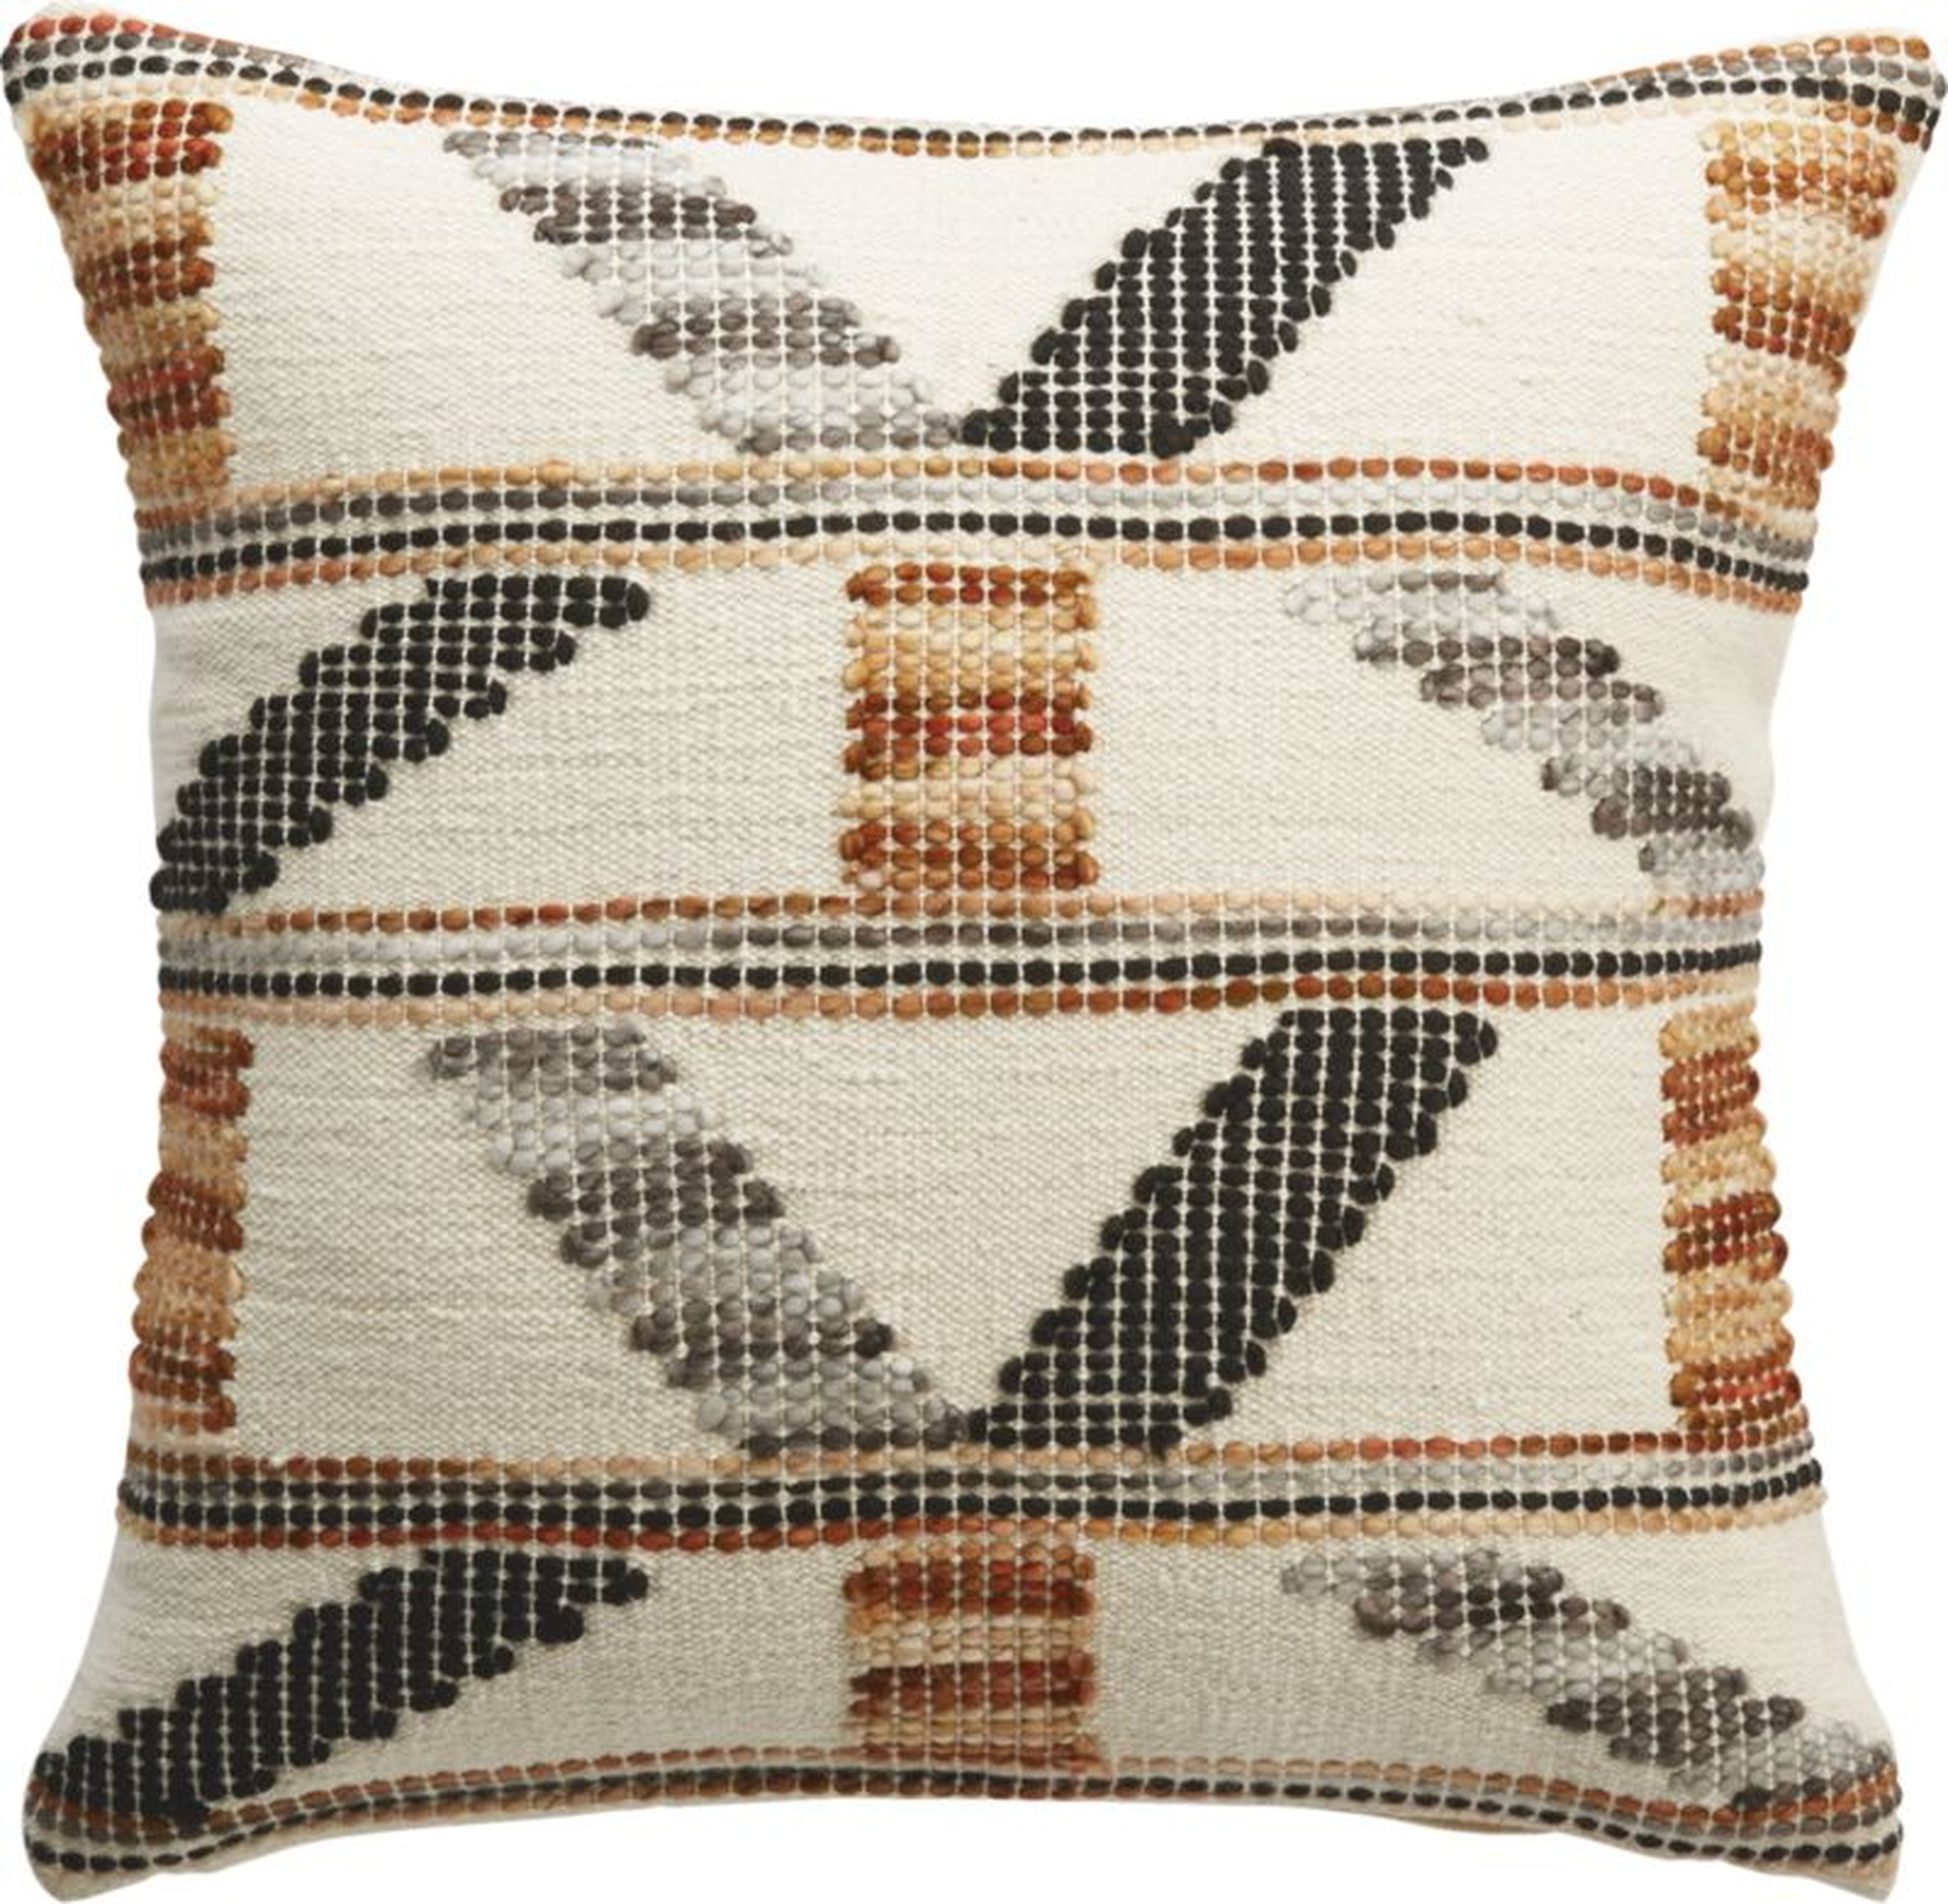 16" Dorado Handwoven Pillow with Down-Alternative Insert - CB2